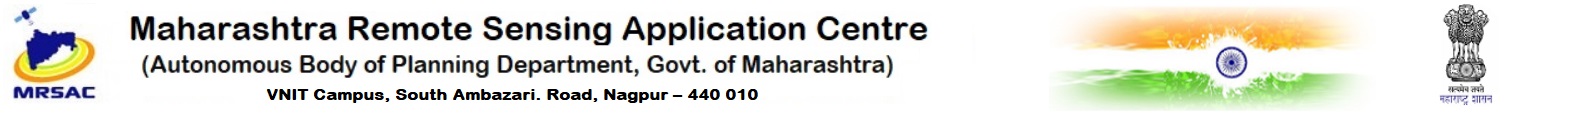 MAHARASHTRA REMOTE SENSING APPLICATION CENTRE
(Autonomous Body of Planning Department, Govt. of Maharashtra) 